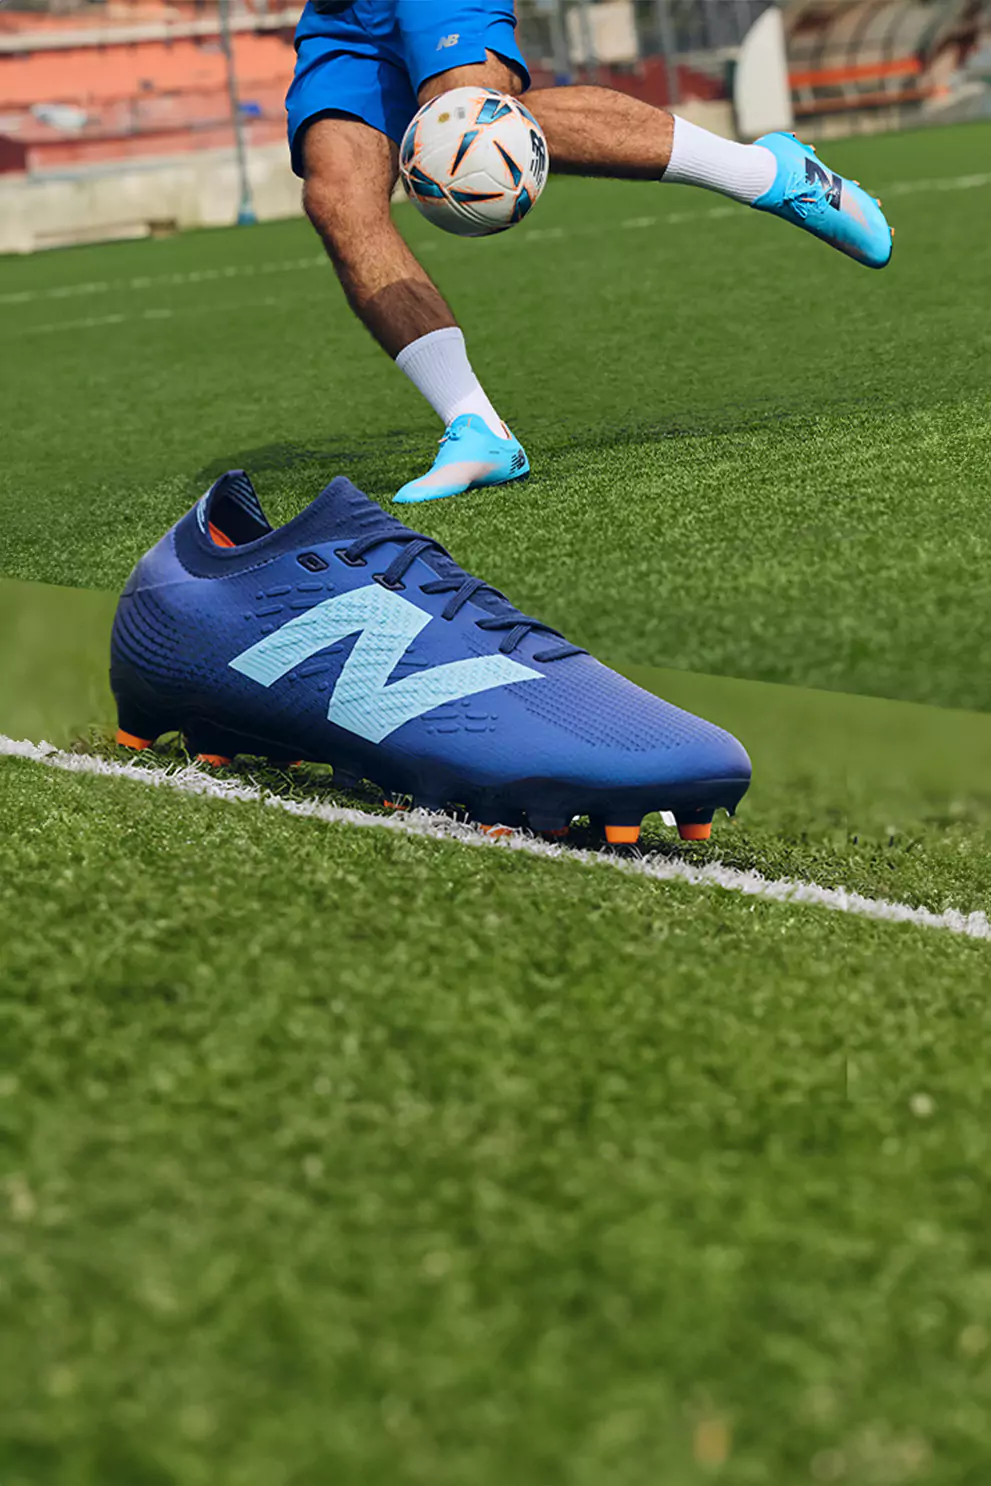 Nike Pro sport ankle sleeve 2.0 – Soccer Sport Fitness